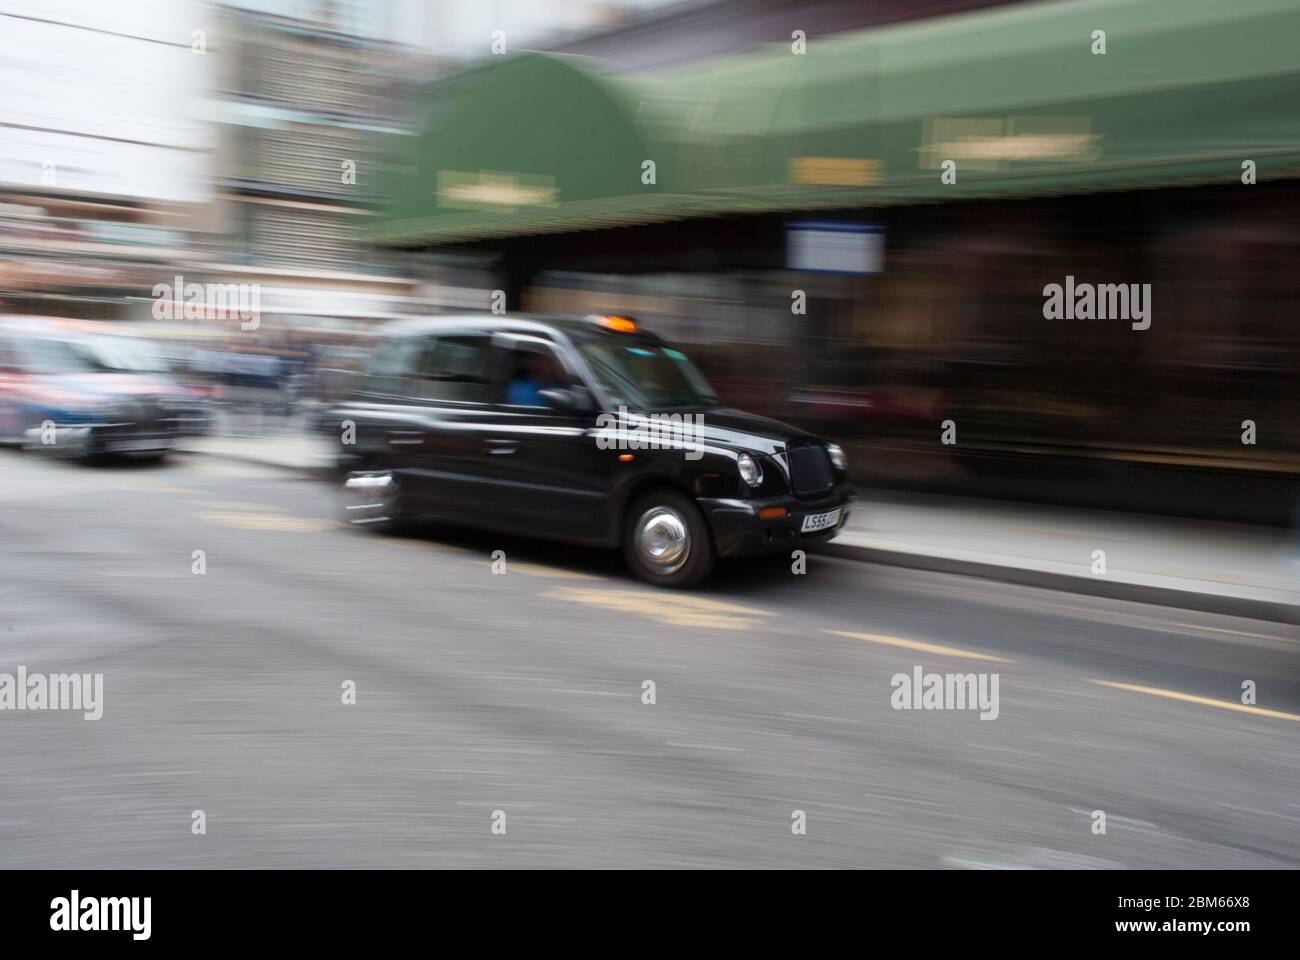 Black Taxi Cab Car Outside Harrods in Knightsbridge, London SW1X Stock Photo